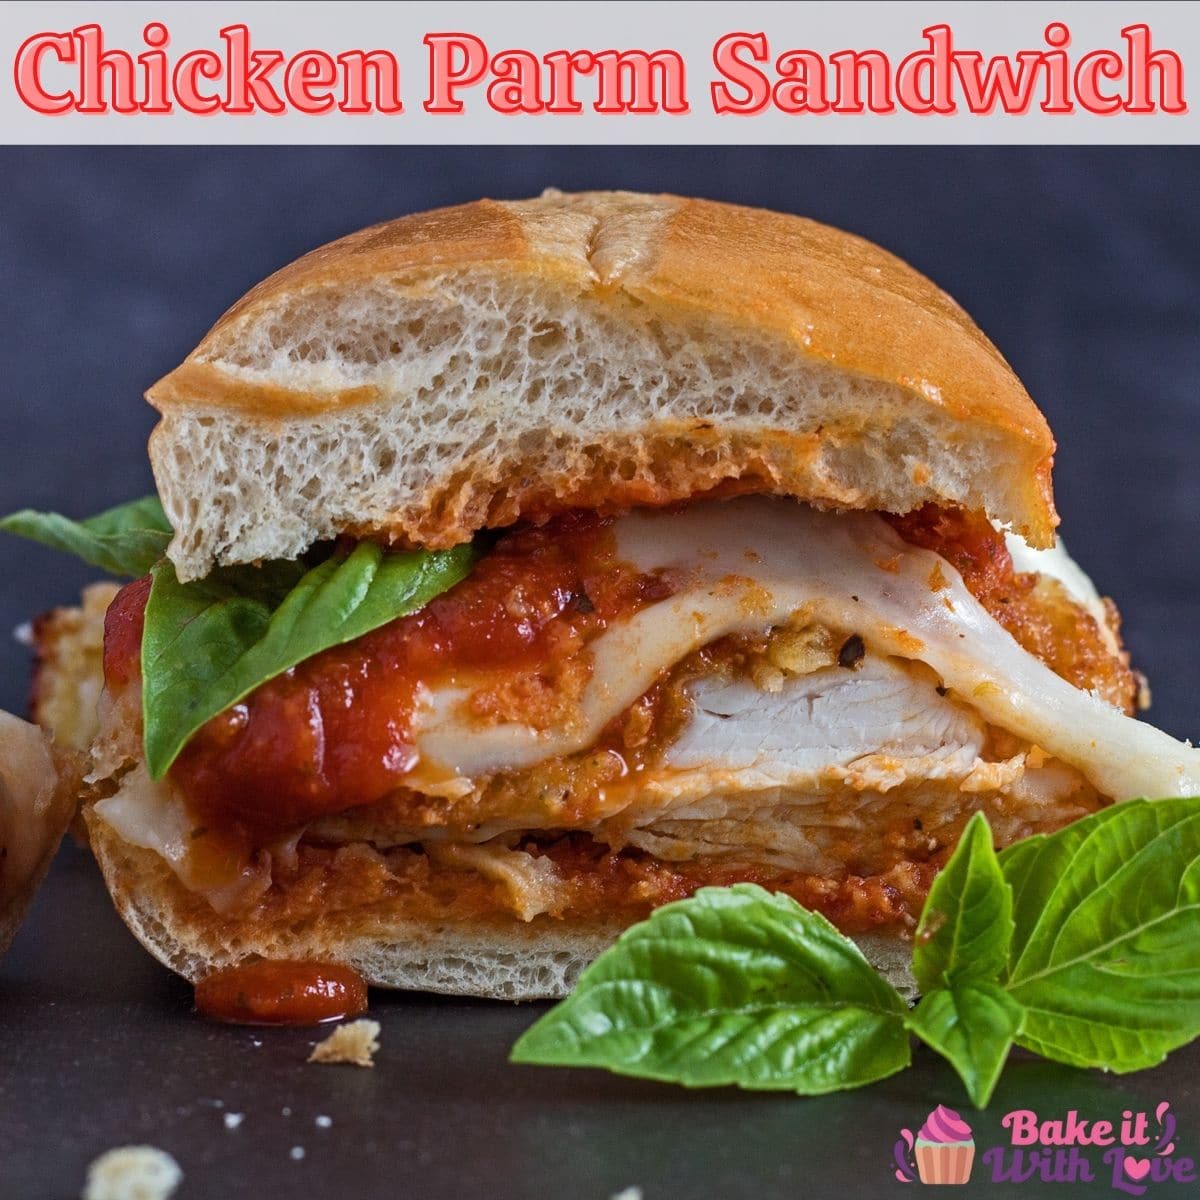 Chicken Parmesan Sandwich pin with text header.